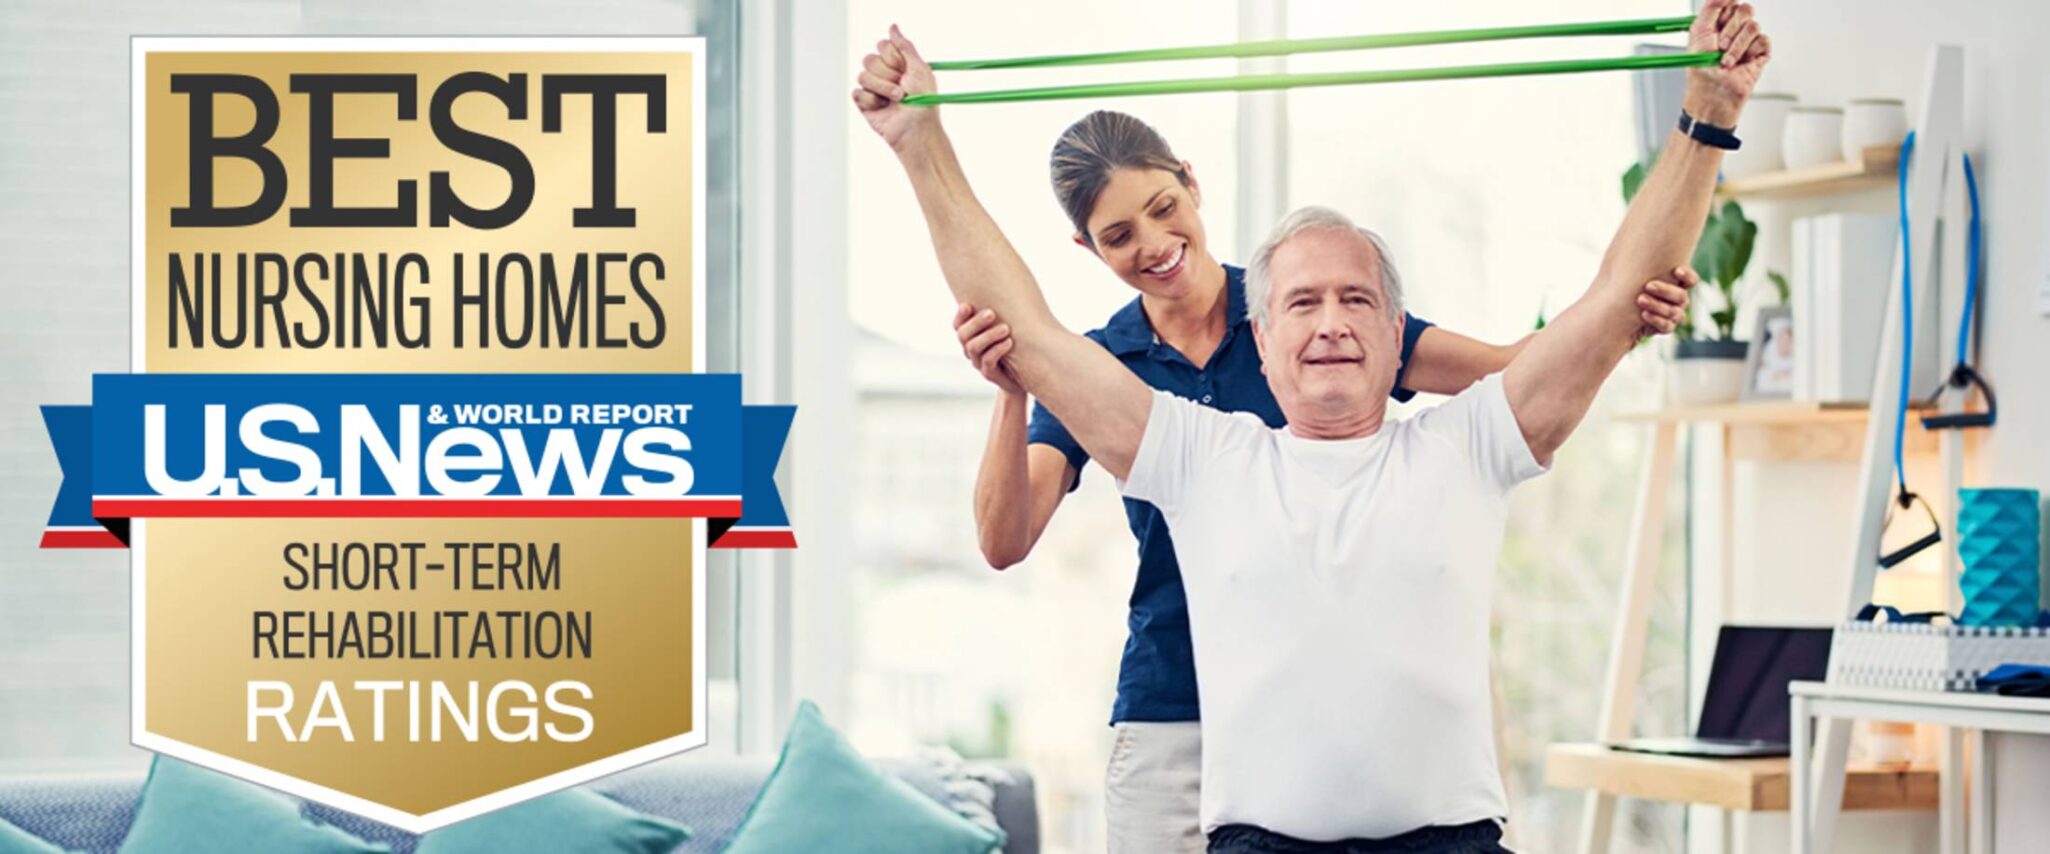 U.S. News & World Best Nursing Homes Award for Short-Term Rehabilitation